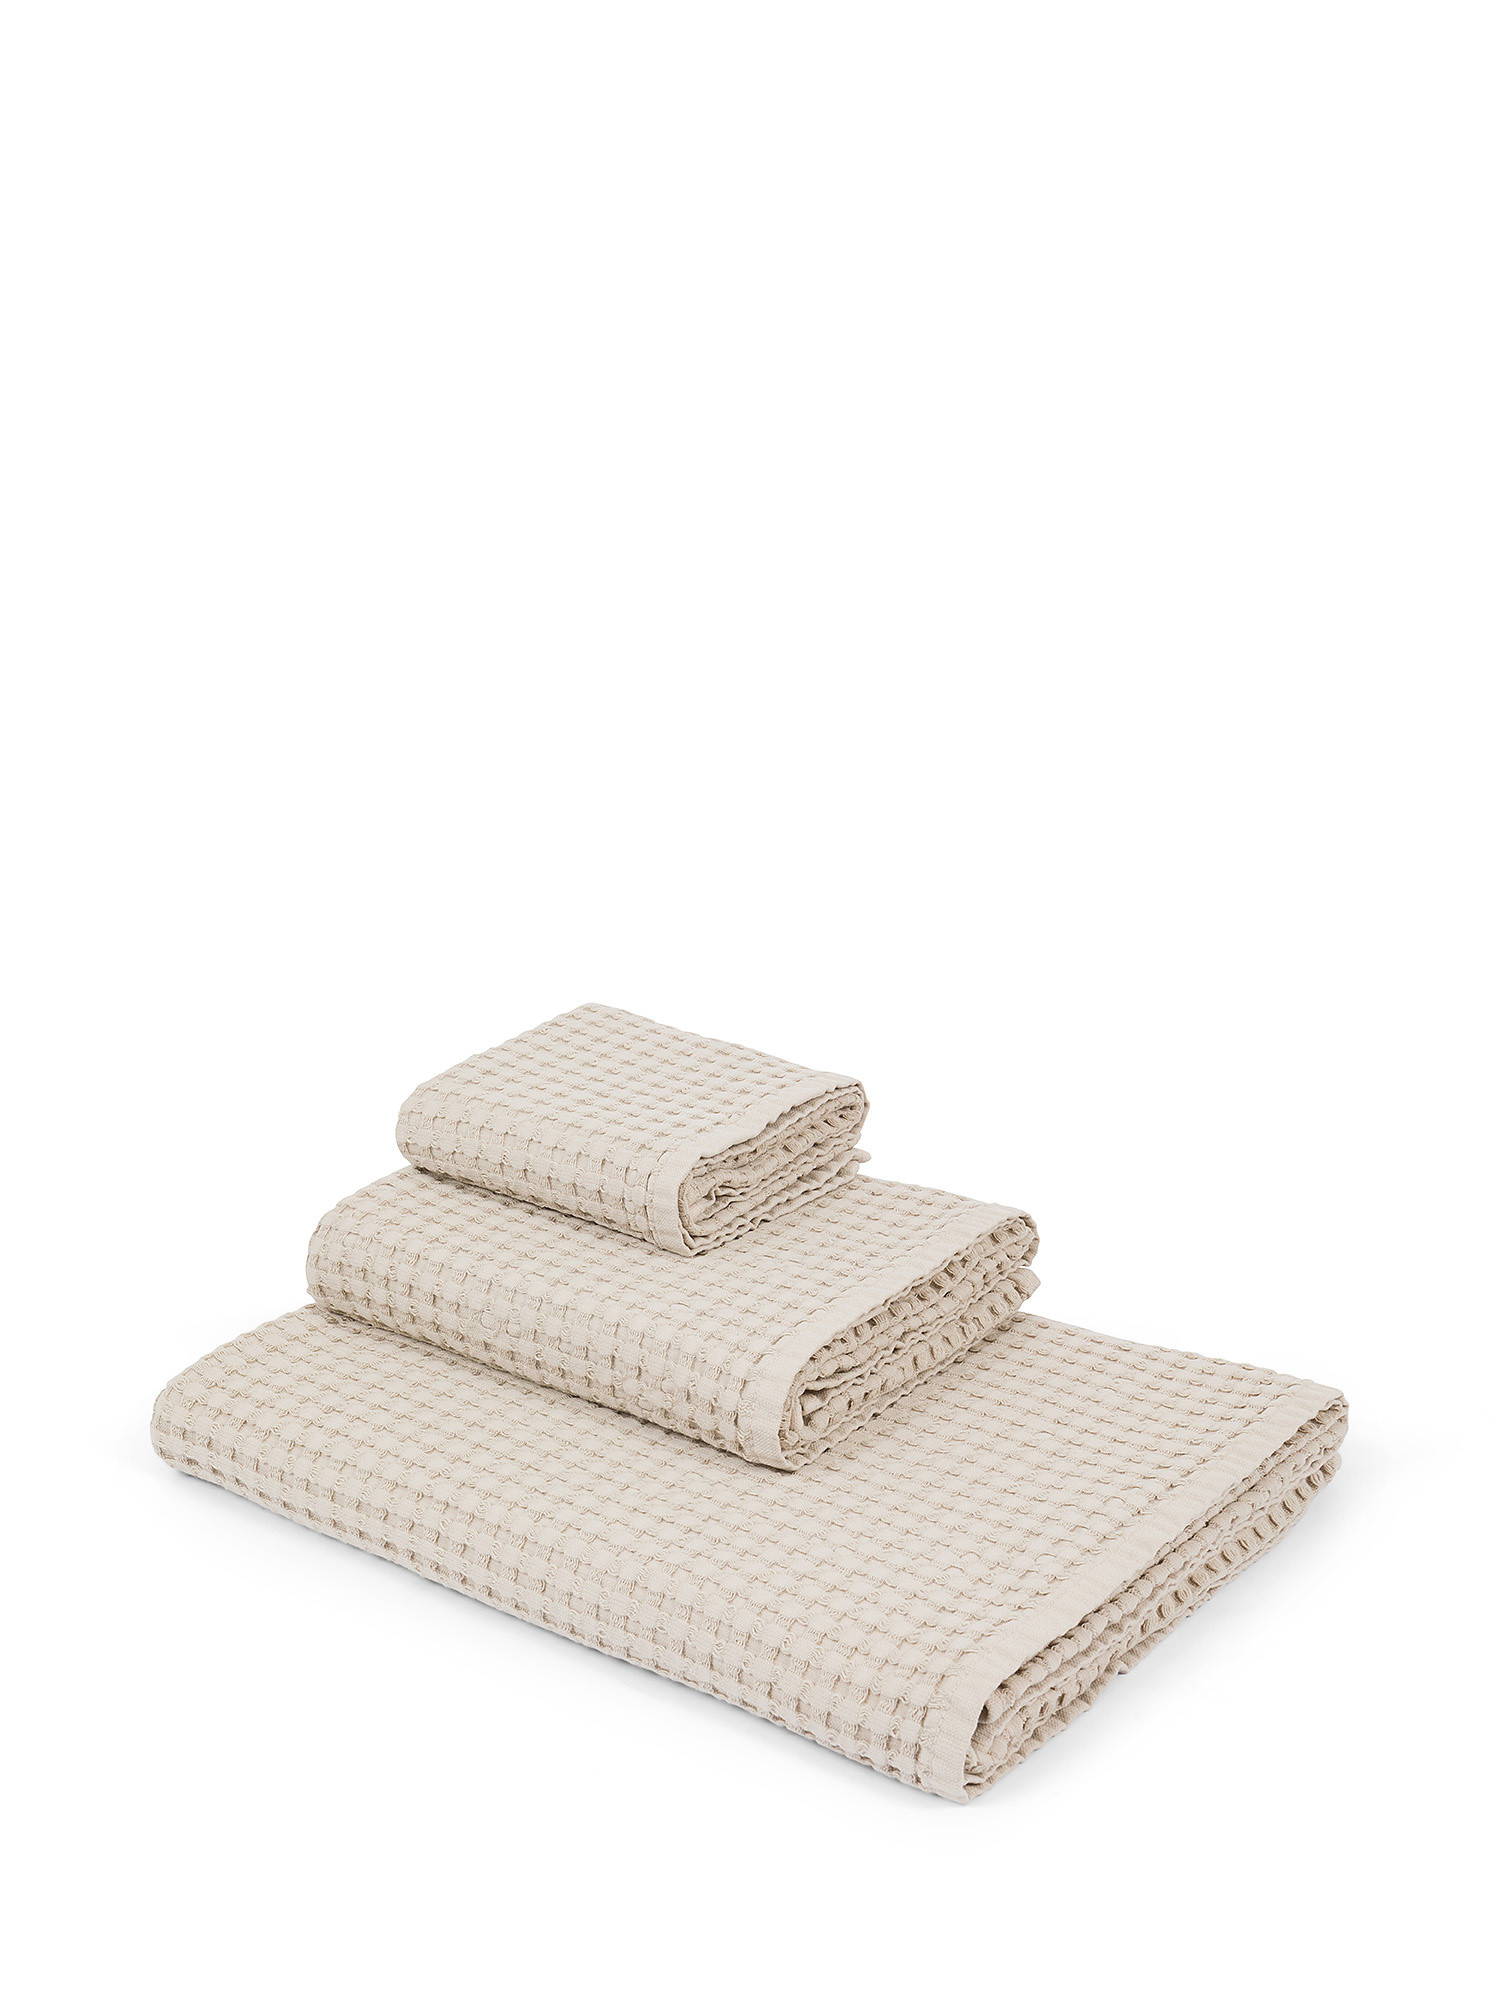 Honeycomb cotton towel, Sand, large image number 0